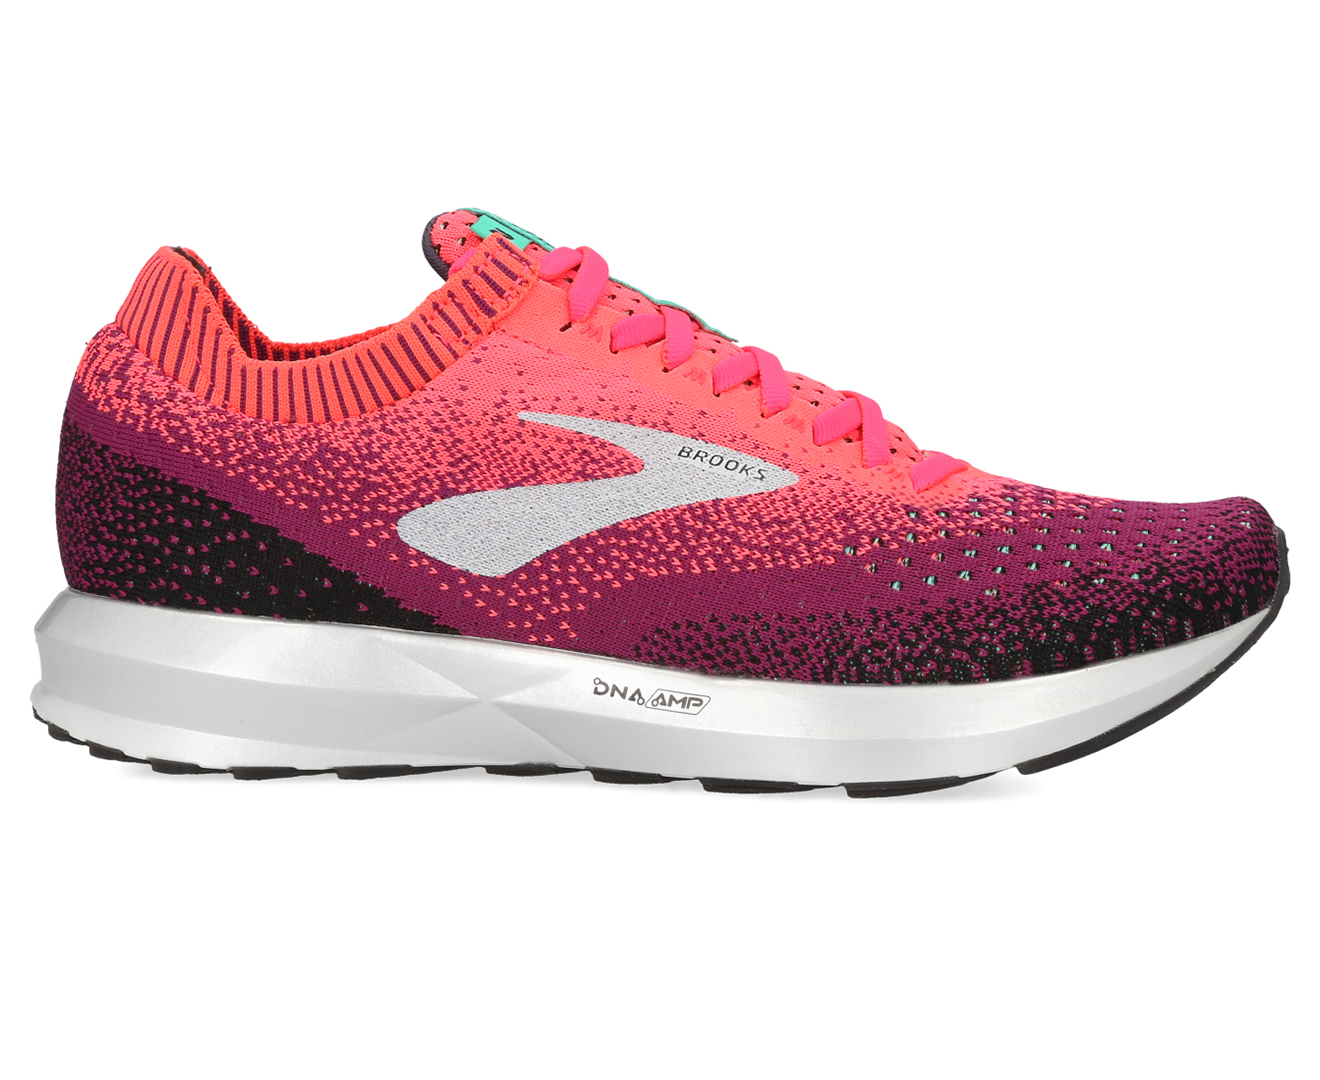 Brooks Women's Levitate 2 Running Shoes - Pink/Black/Aqua | Catch.com.au